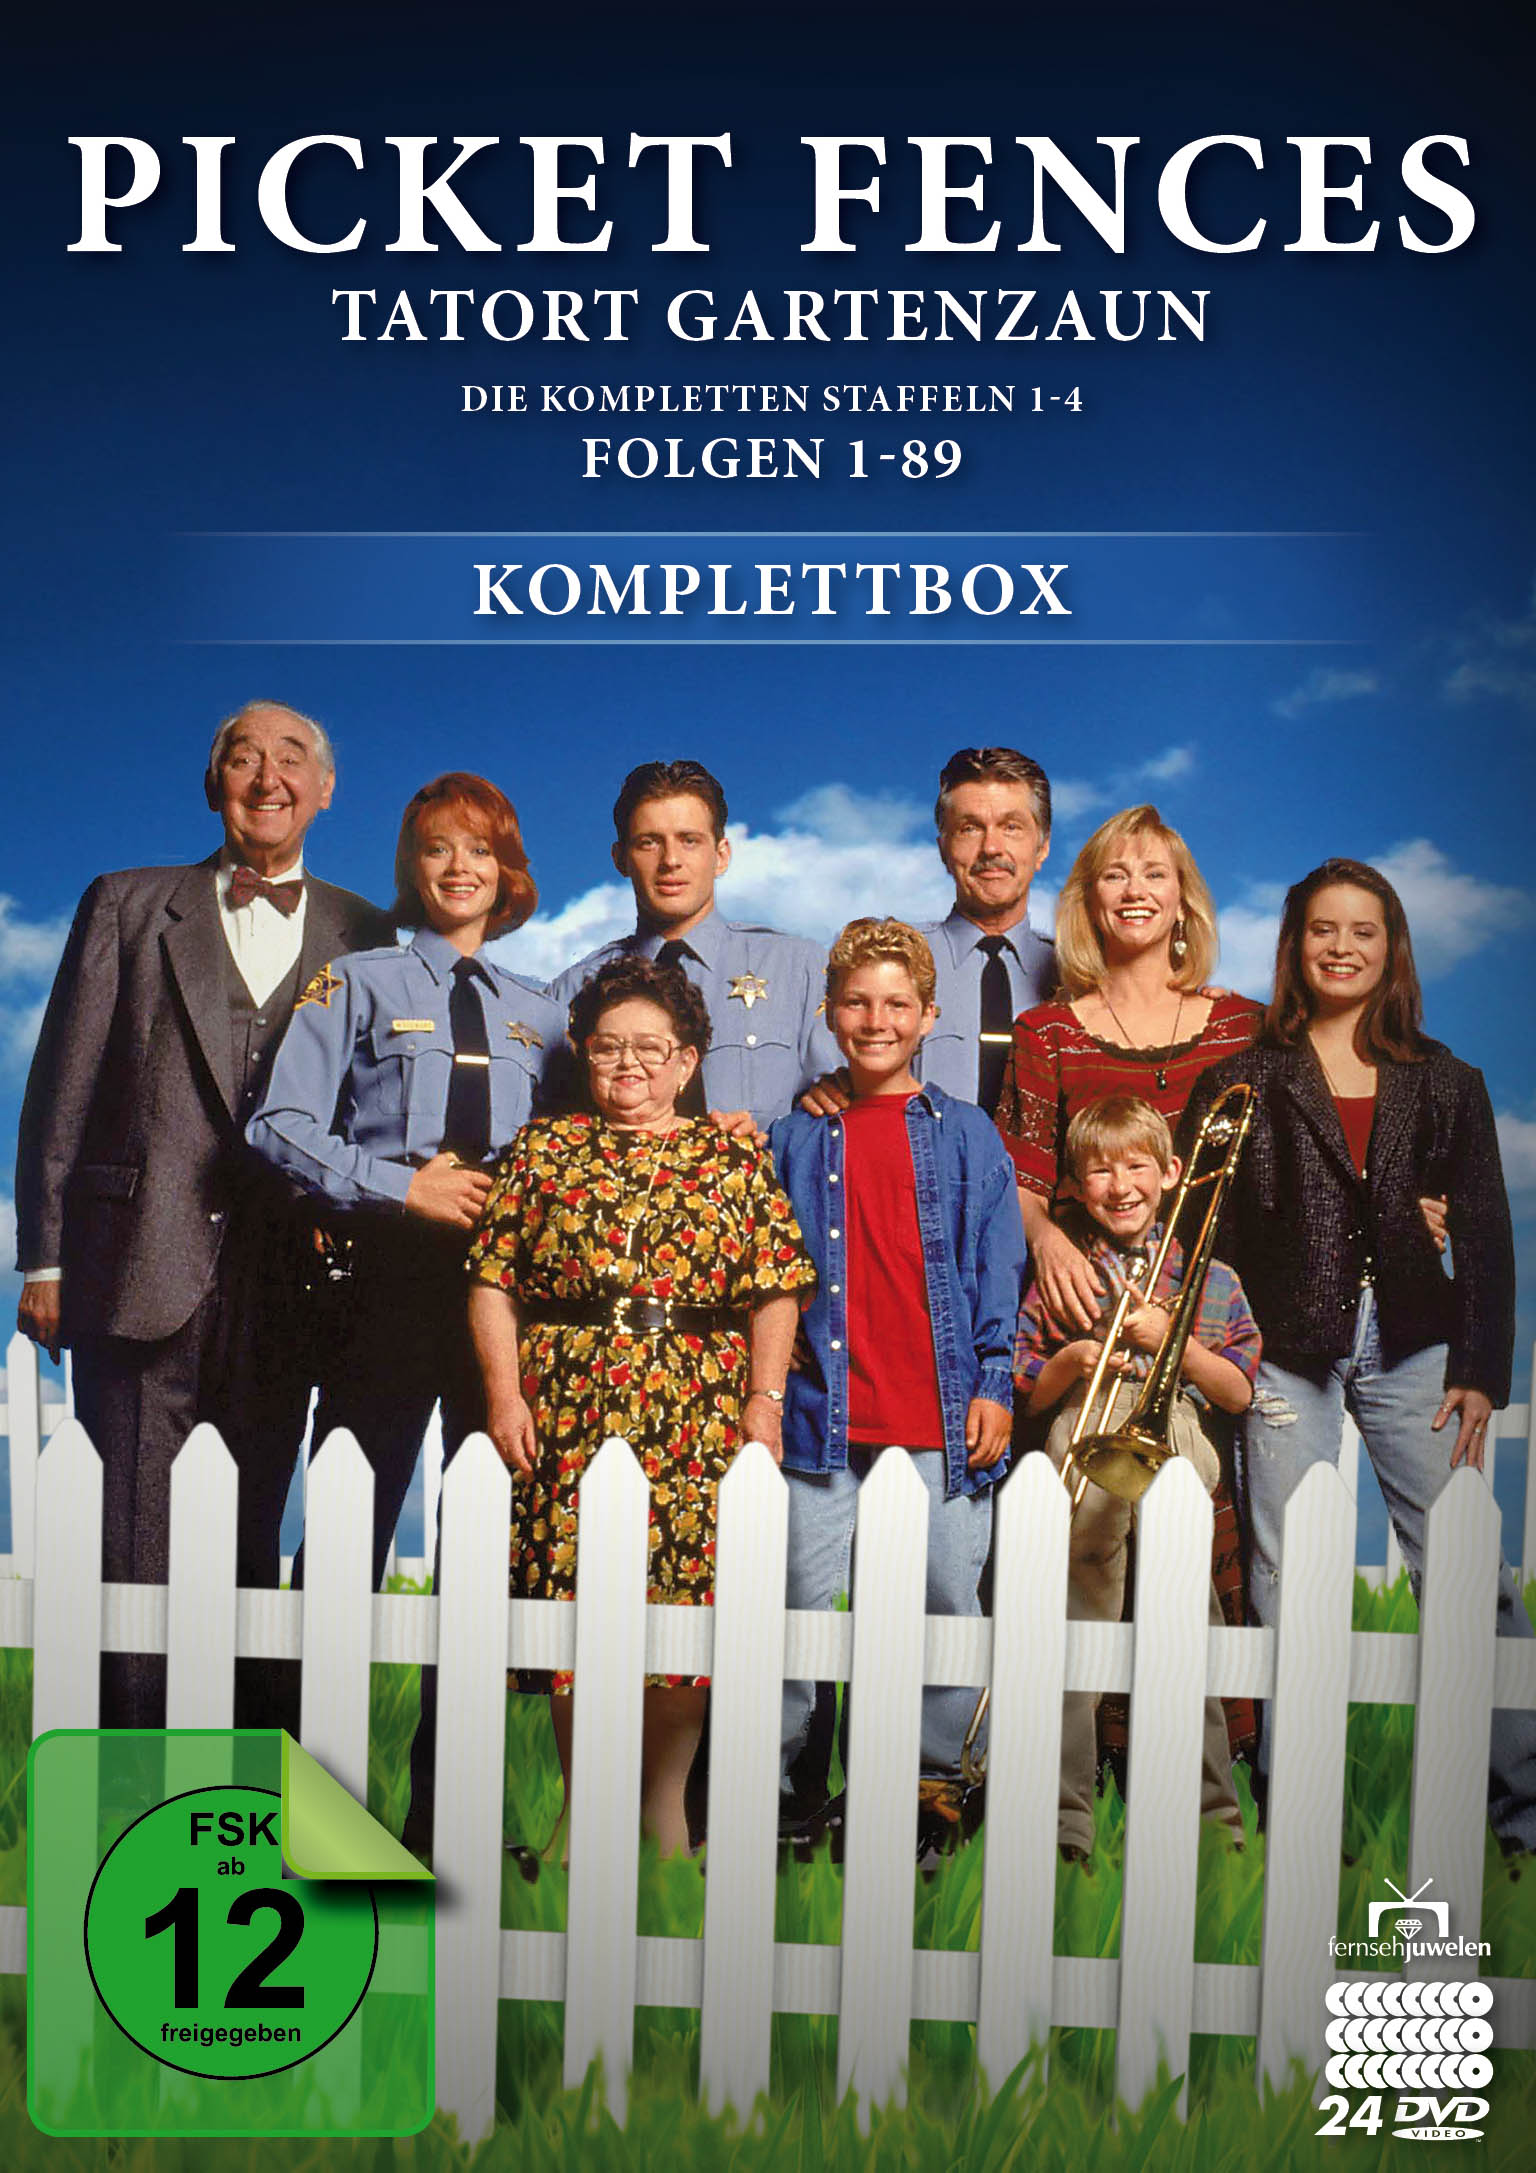 Picket Fences - Gartenzaun DVD Staffel Tatort 1-4 